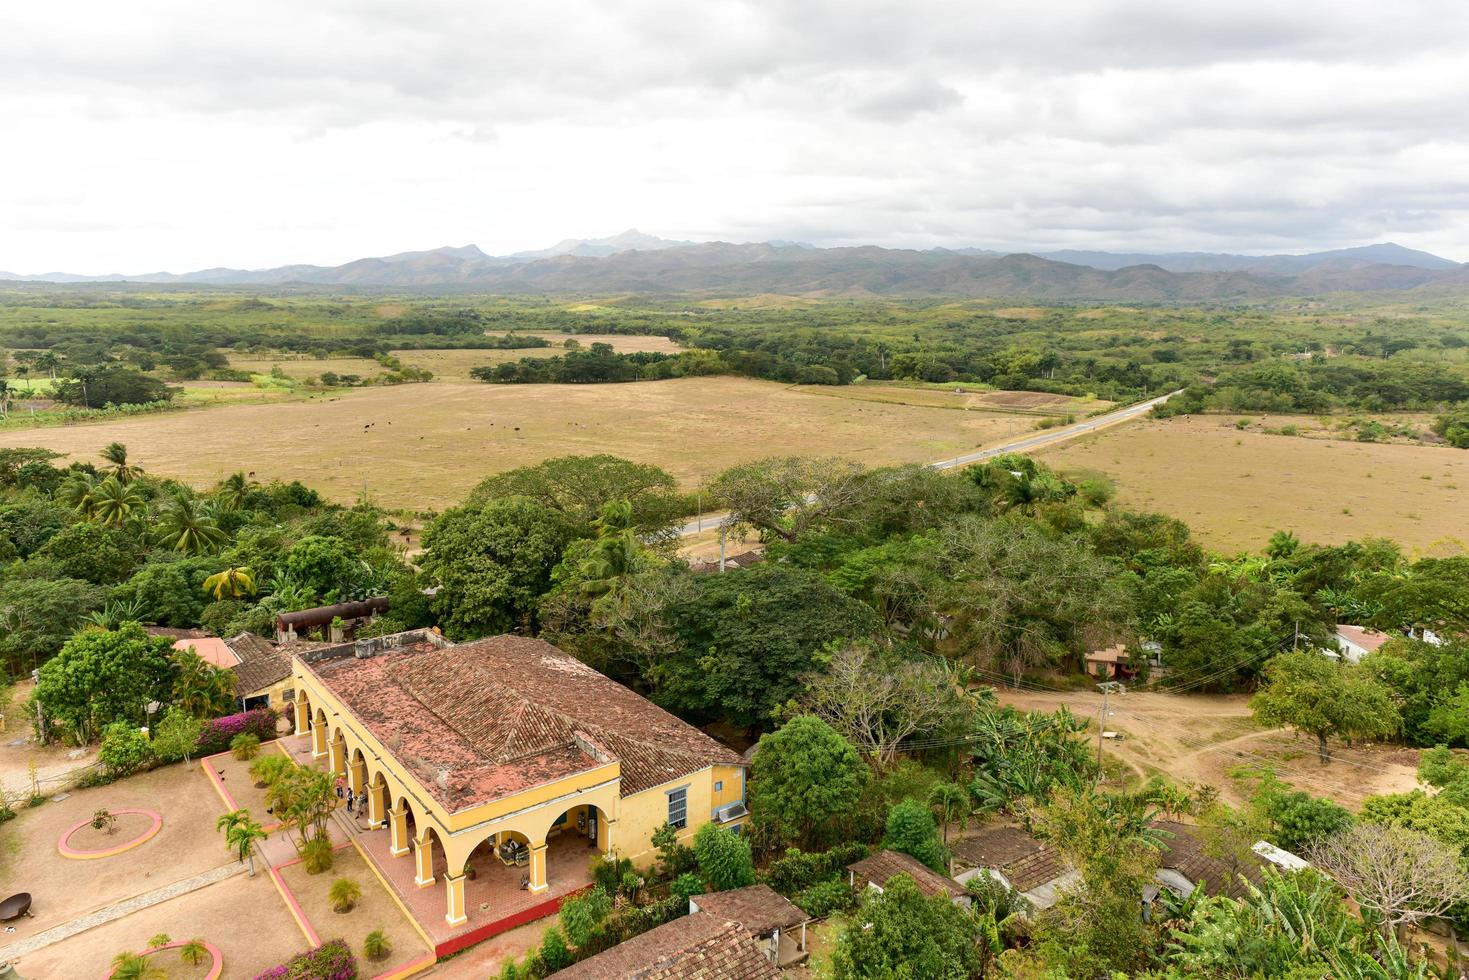 The House of the Manaca Iznaga estate in the Valley de los Ingenios, a UNESCO world heritage site, 2022 photo